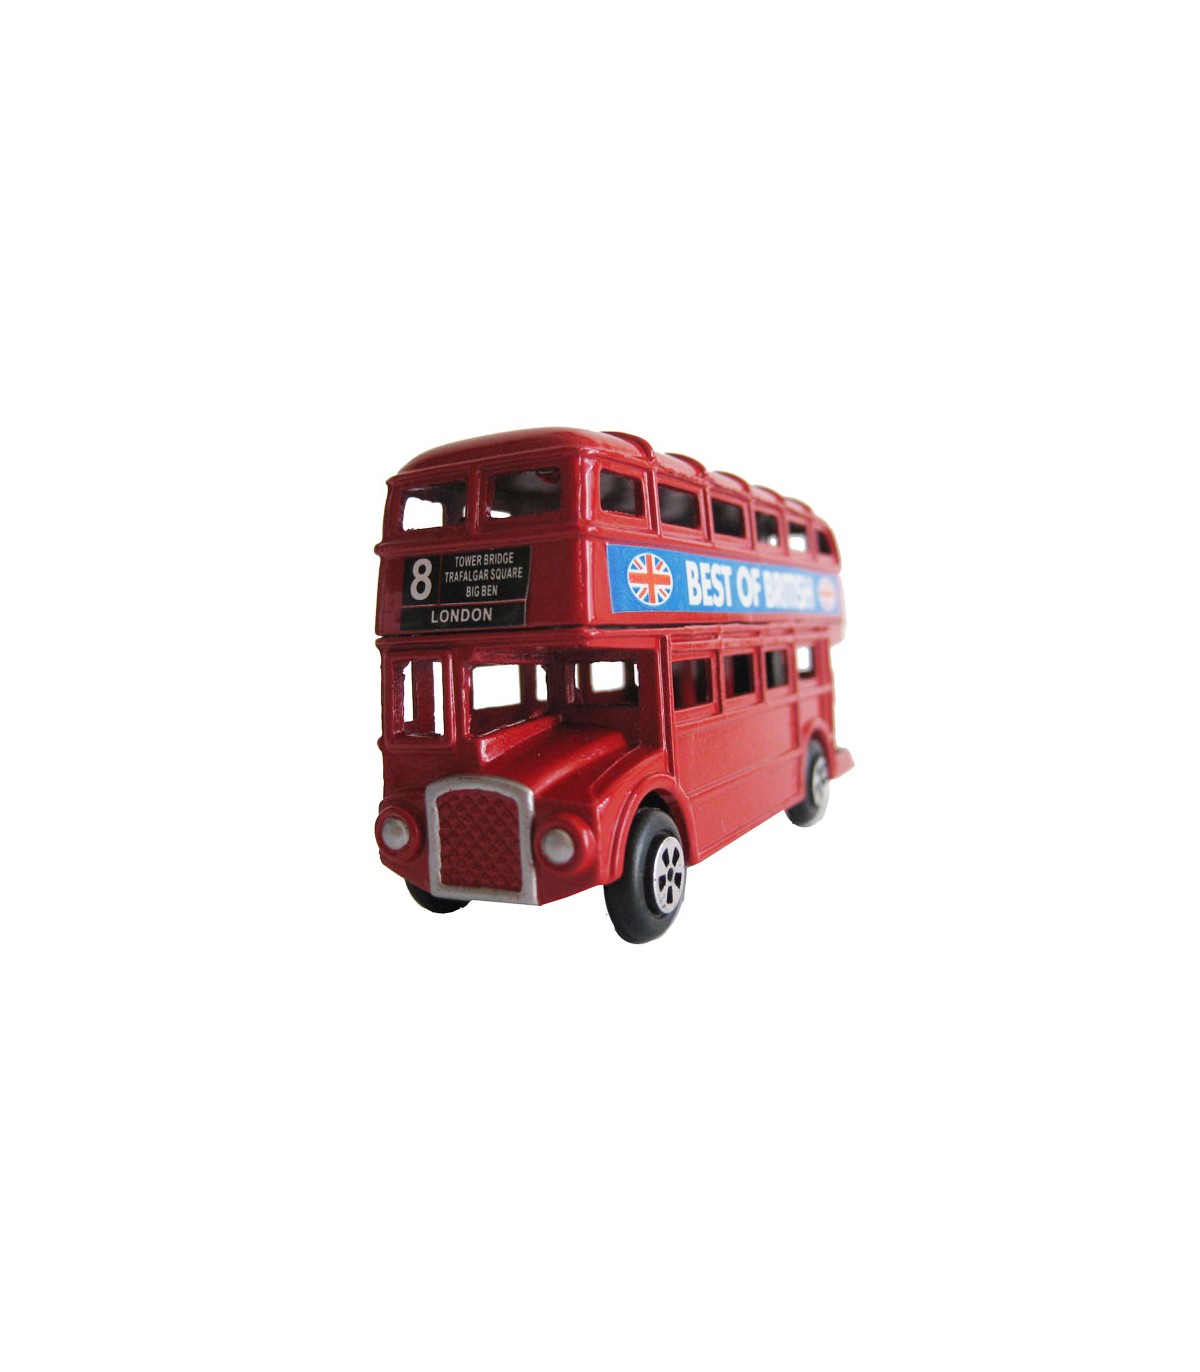 Taille-crayon bus londonien Letterbox | Objets Tendance